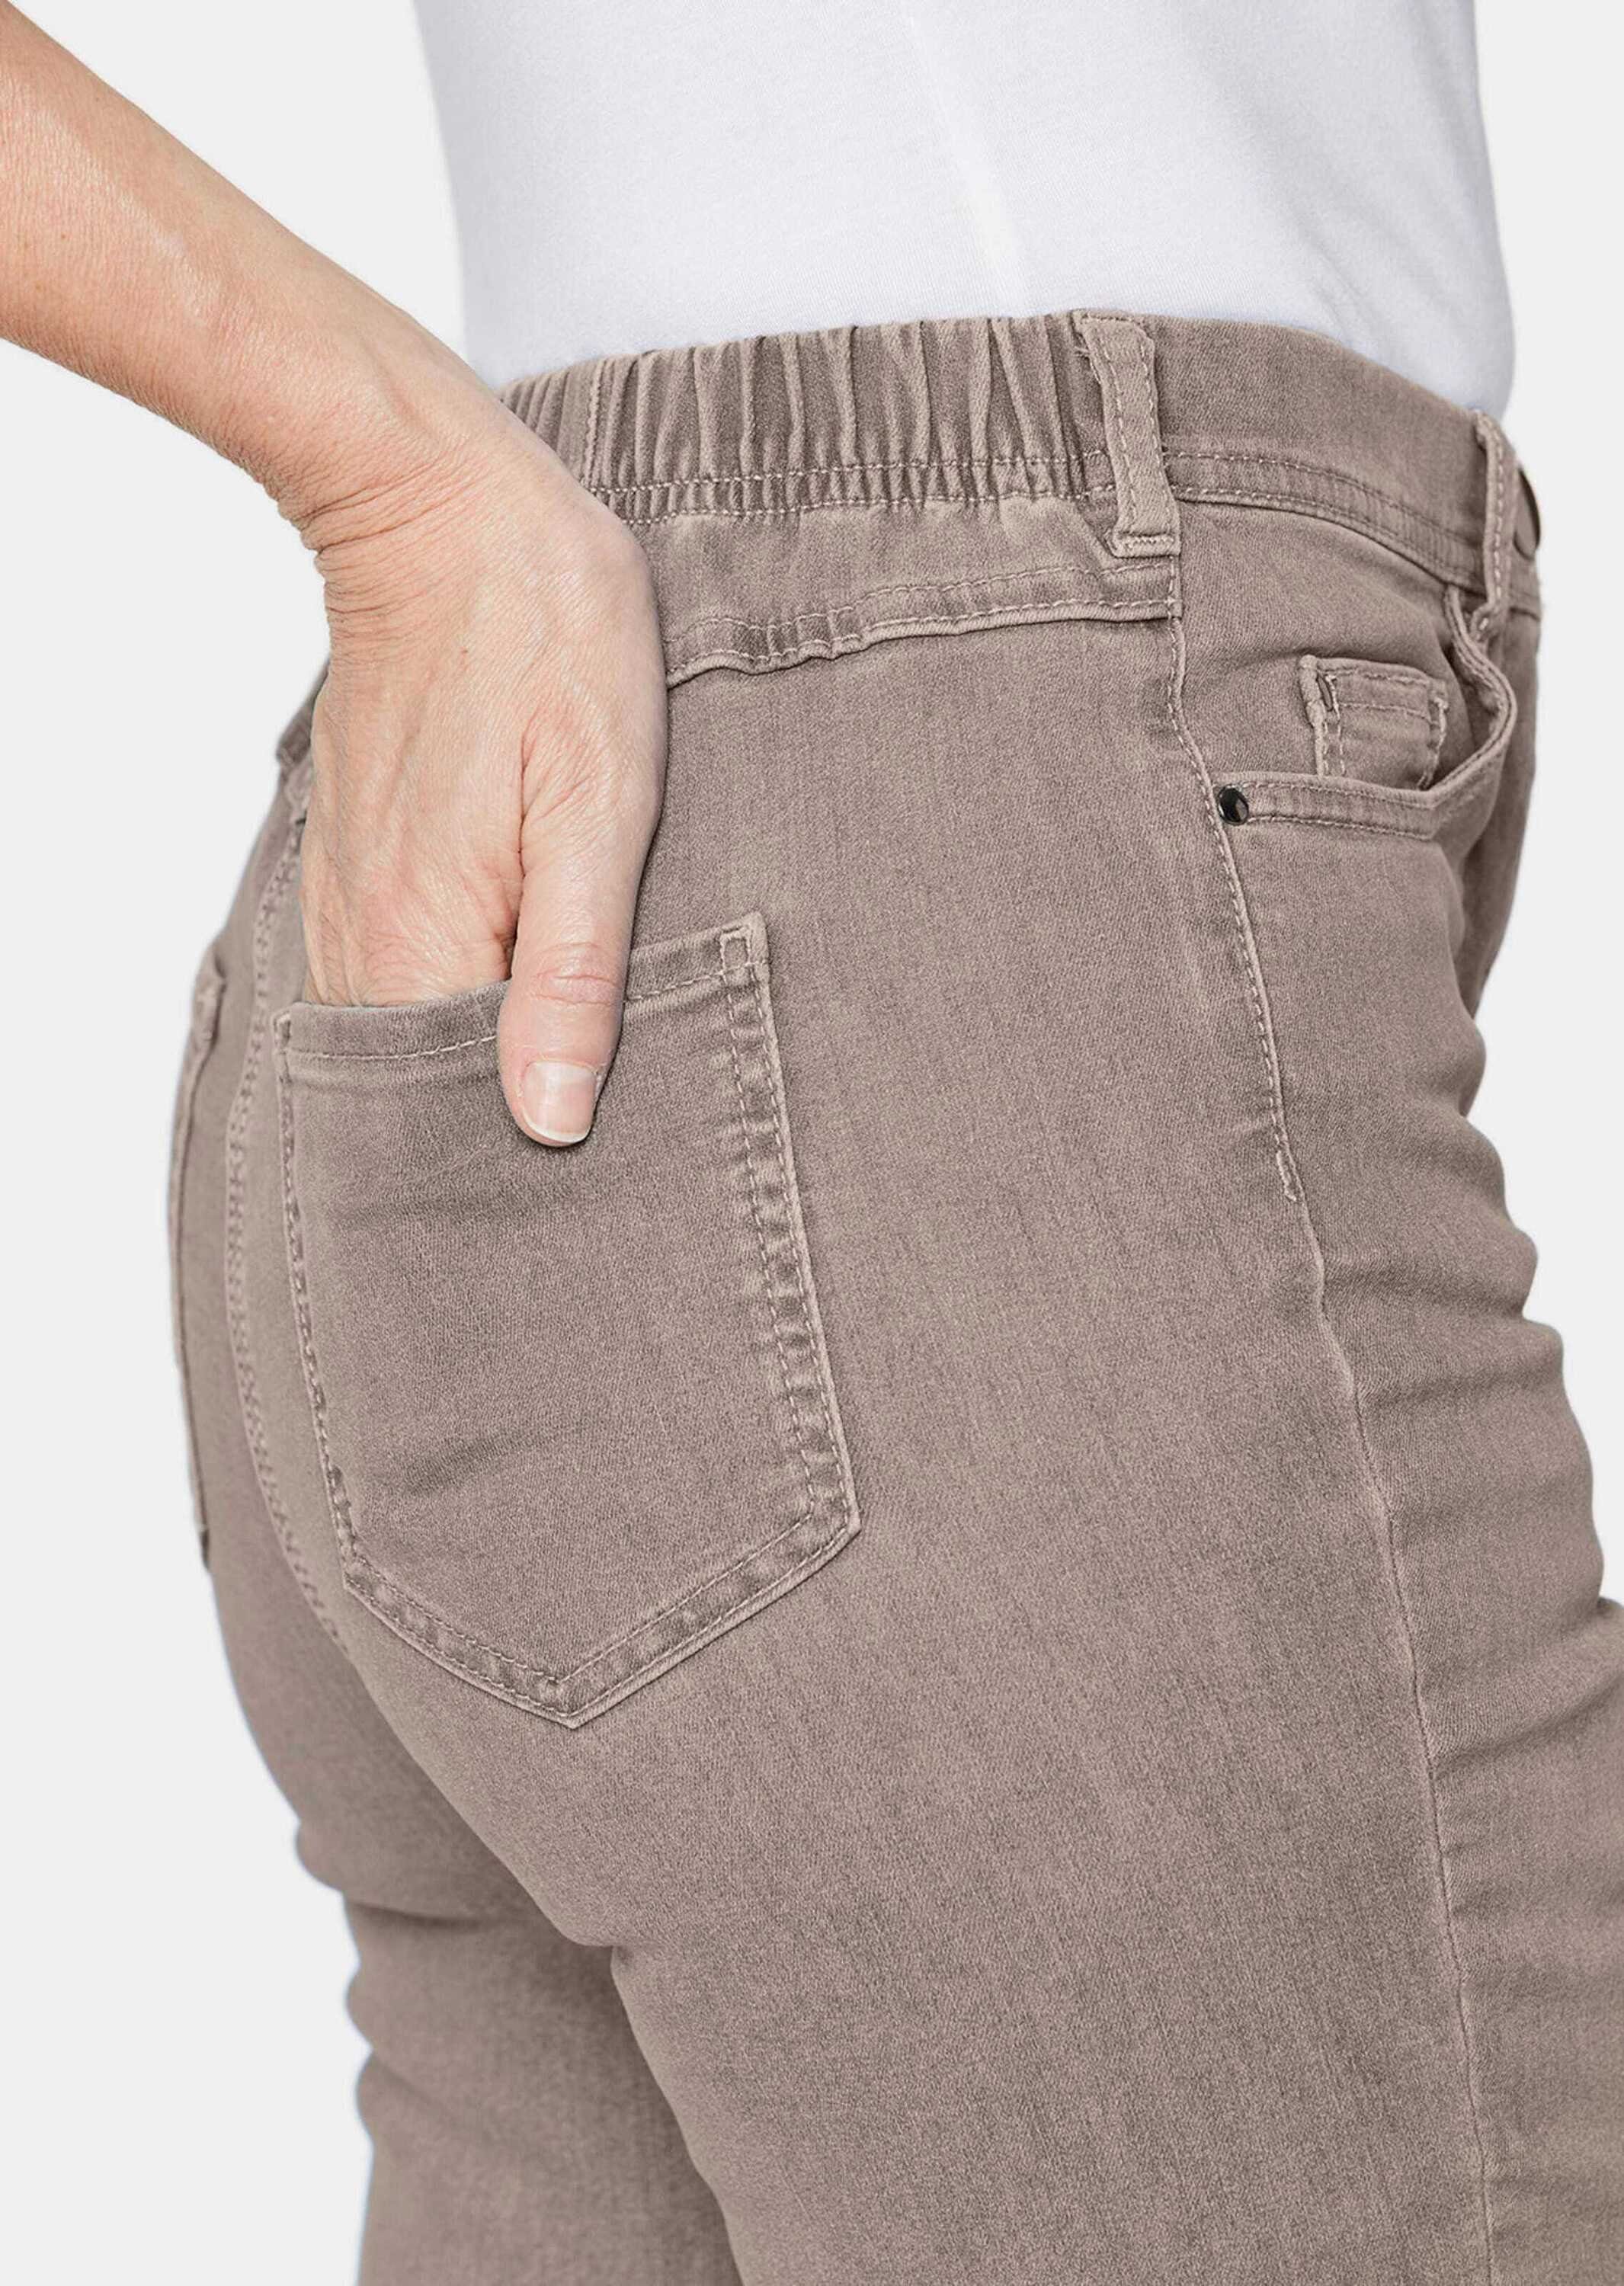 High-Stretch-Jeanshose Jeans Bequeme Bequeme Kurzgröße: taupe GOLDNER